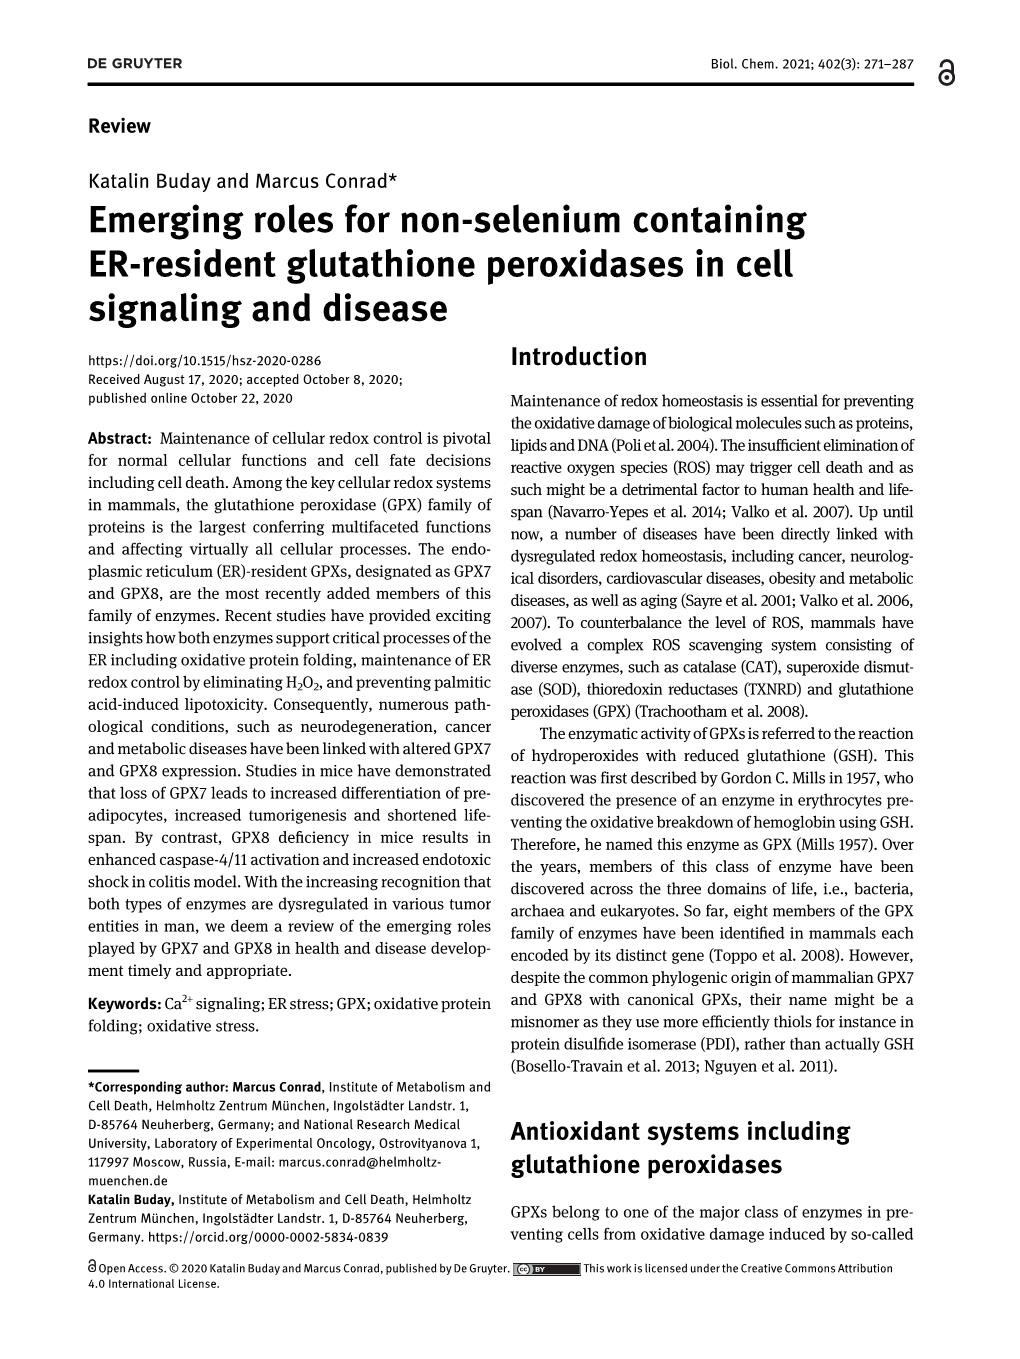 Emerging Roles for Non-Selenium Containing ER-Resident Glutathione